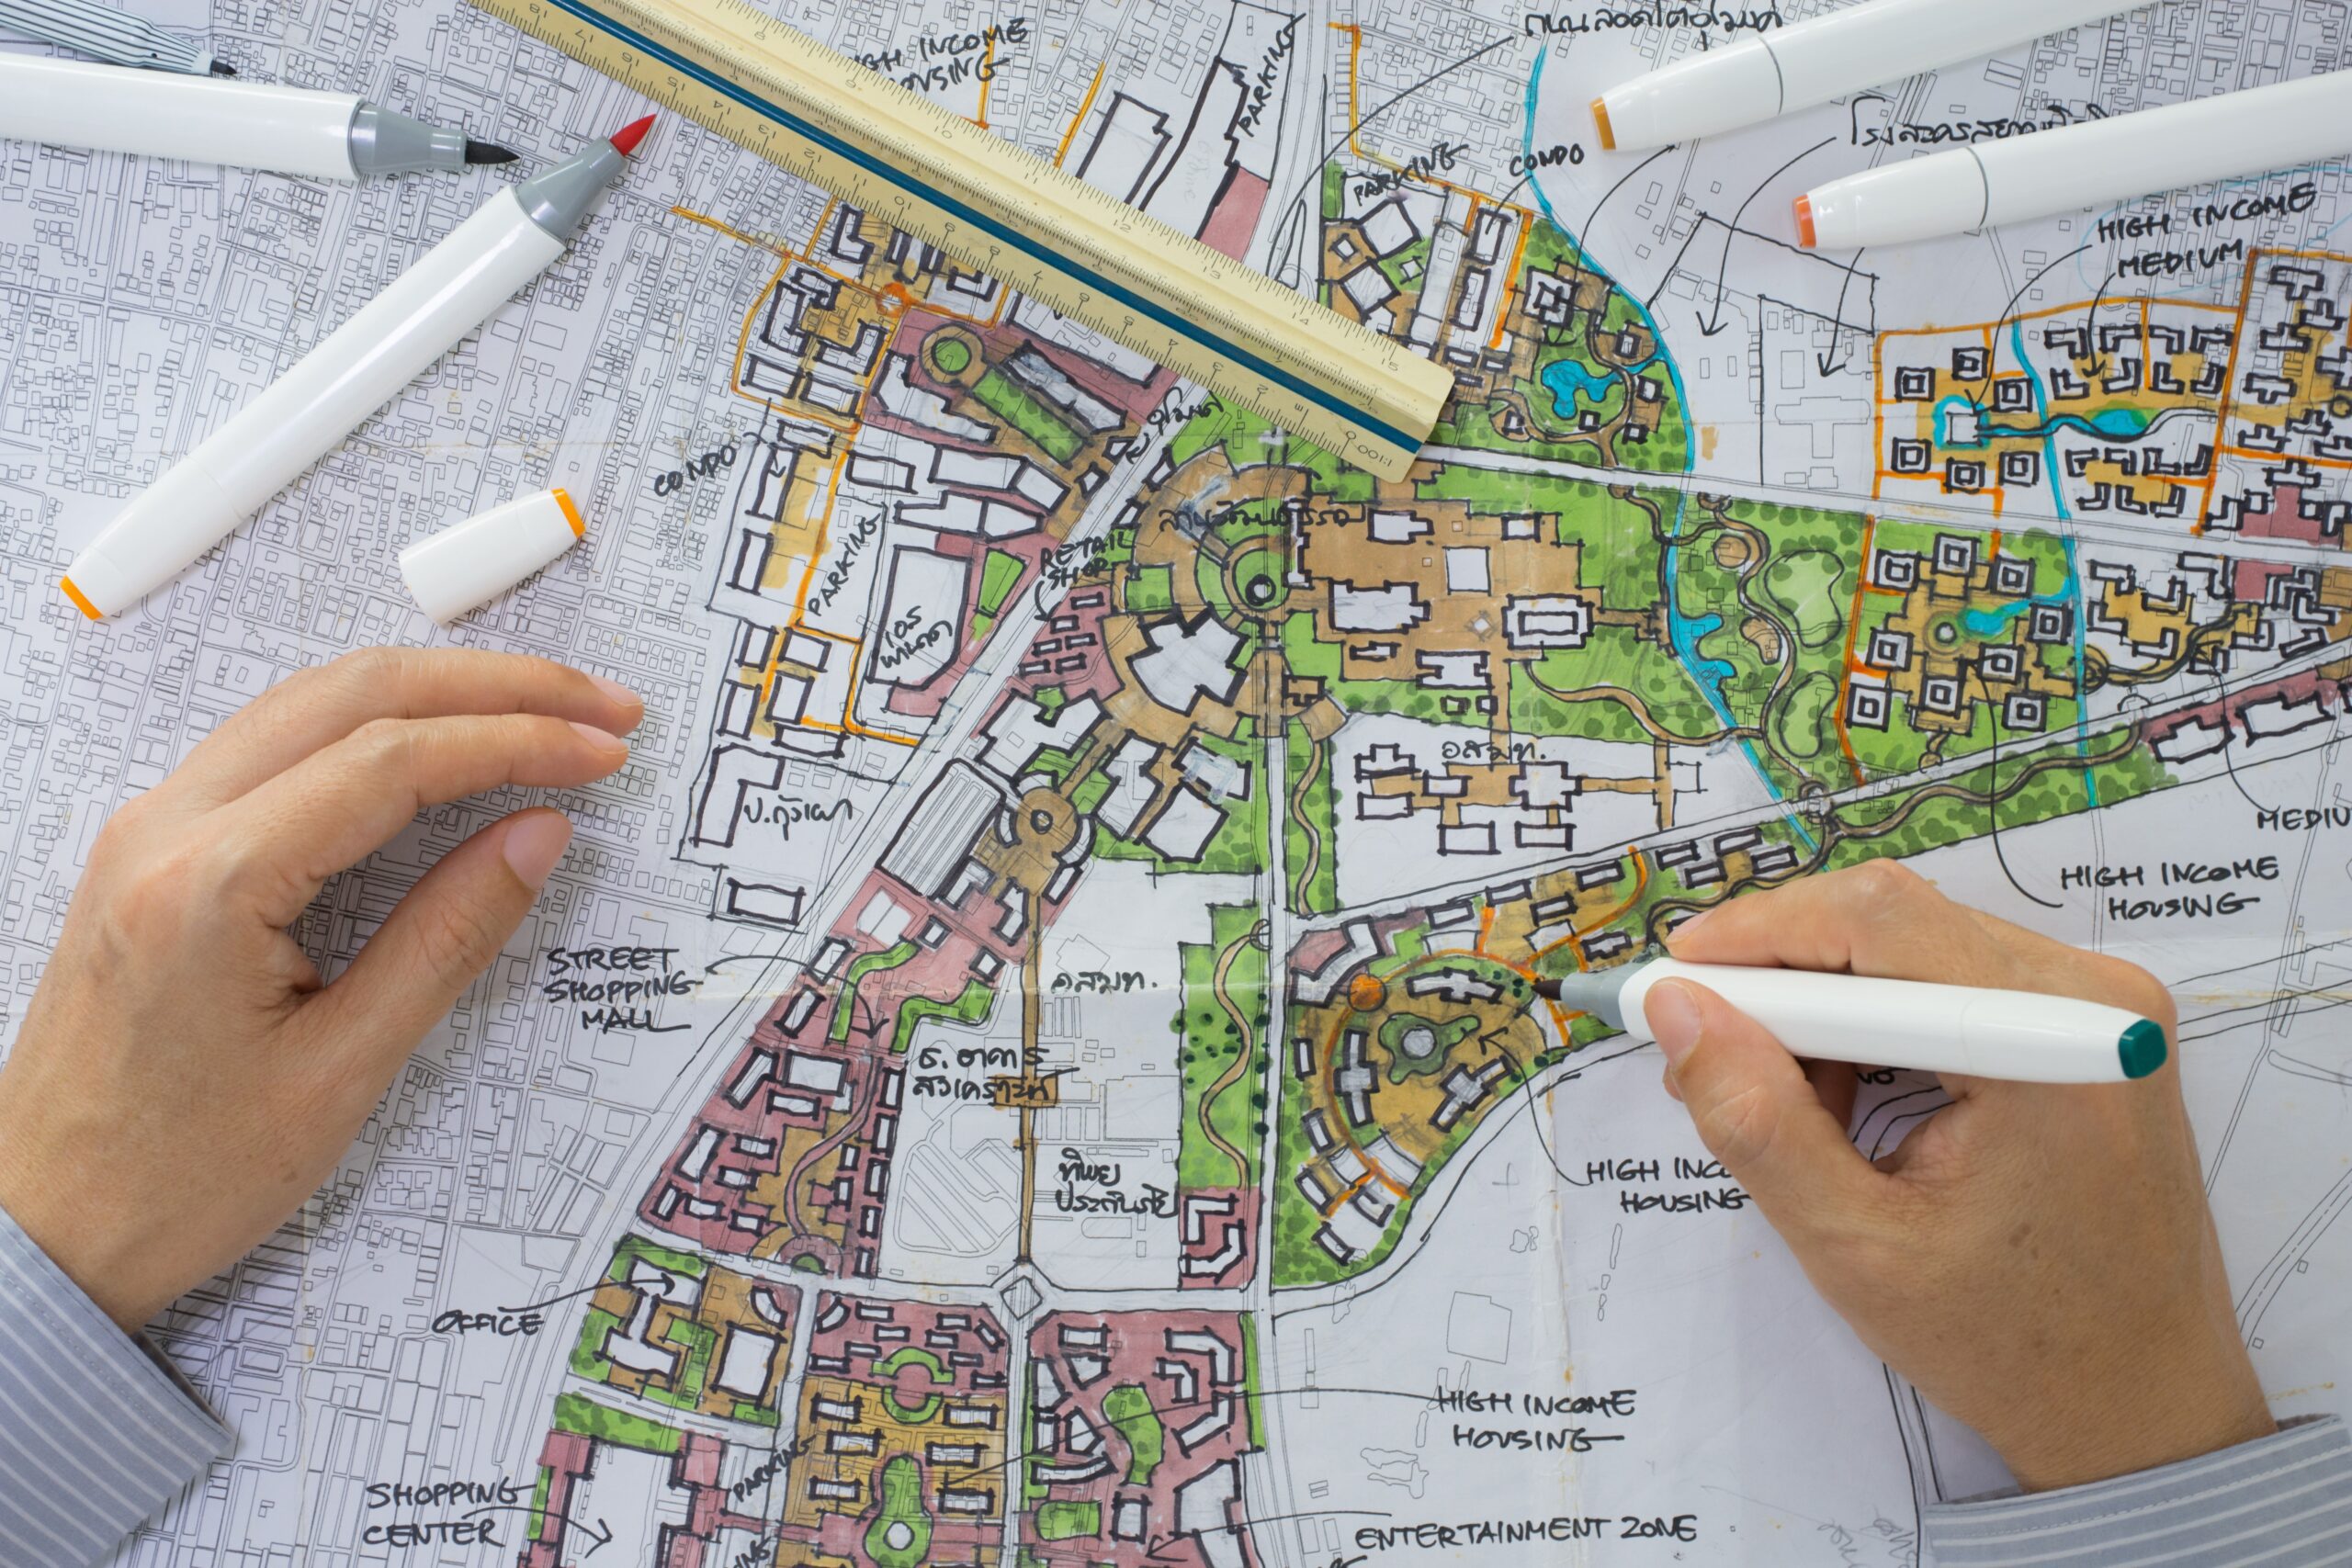 Featured image for “Master Plan of Urban Landscape Design”